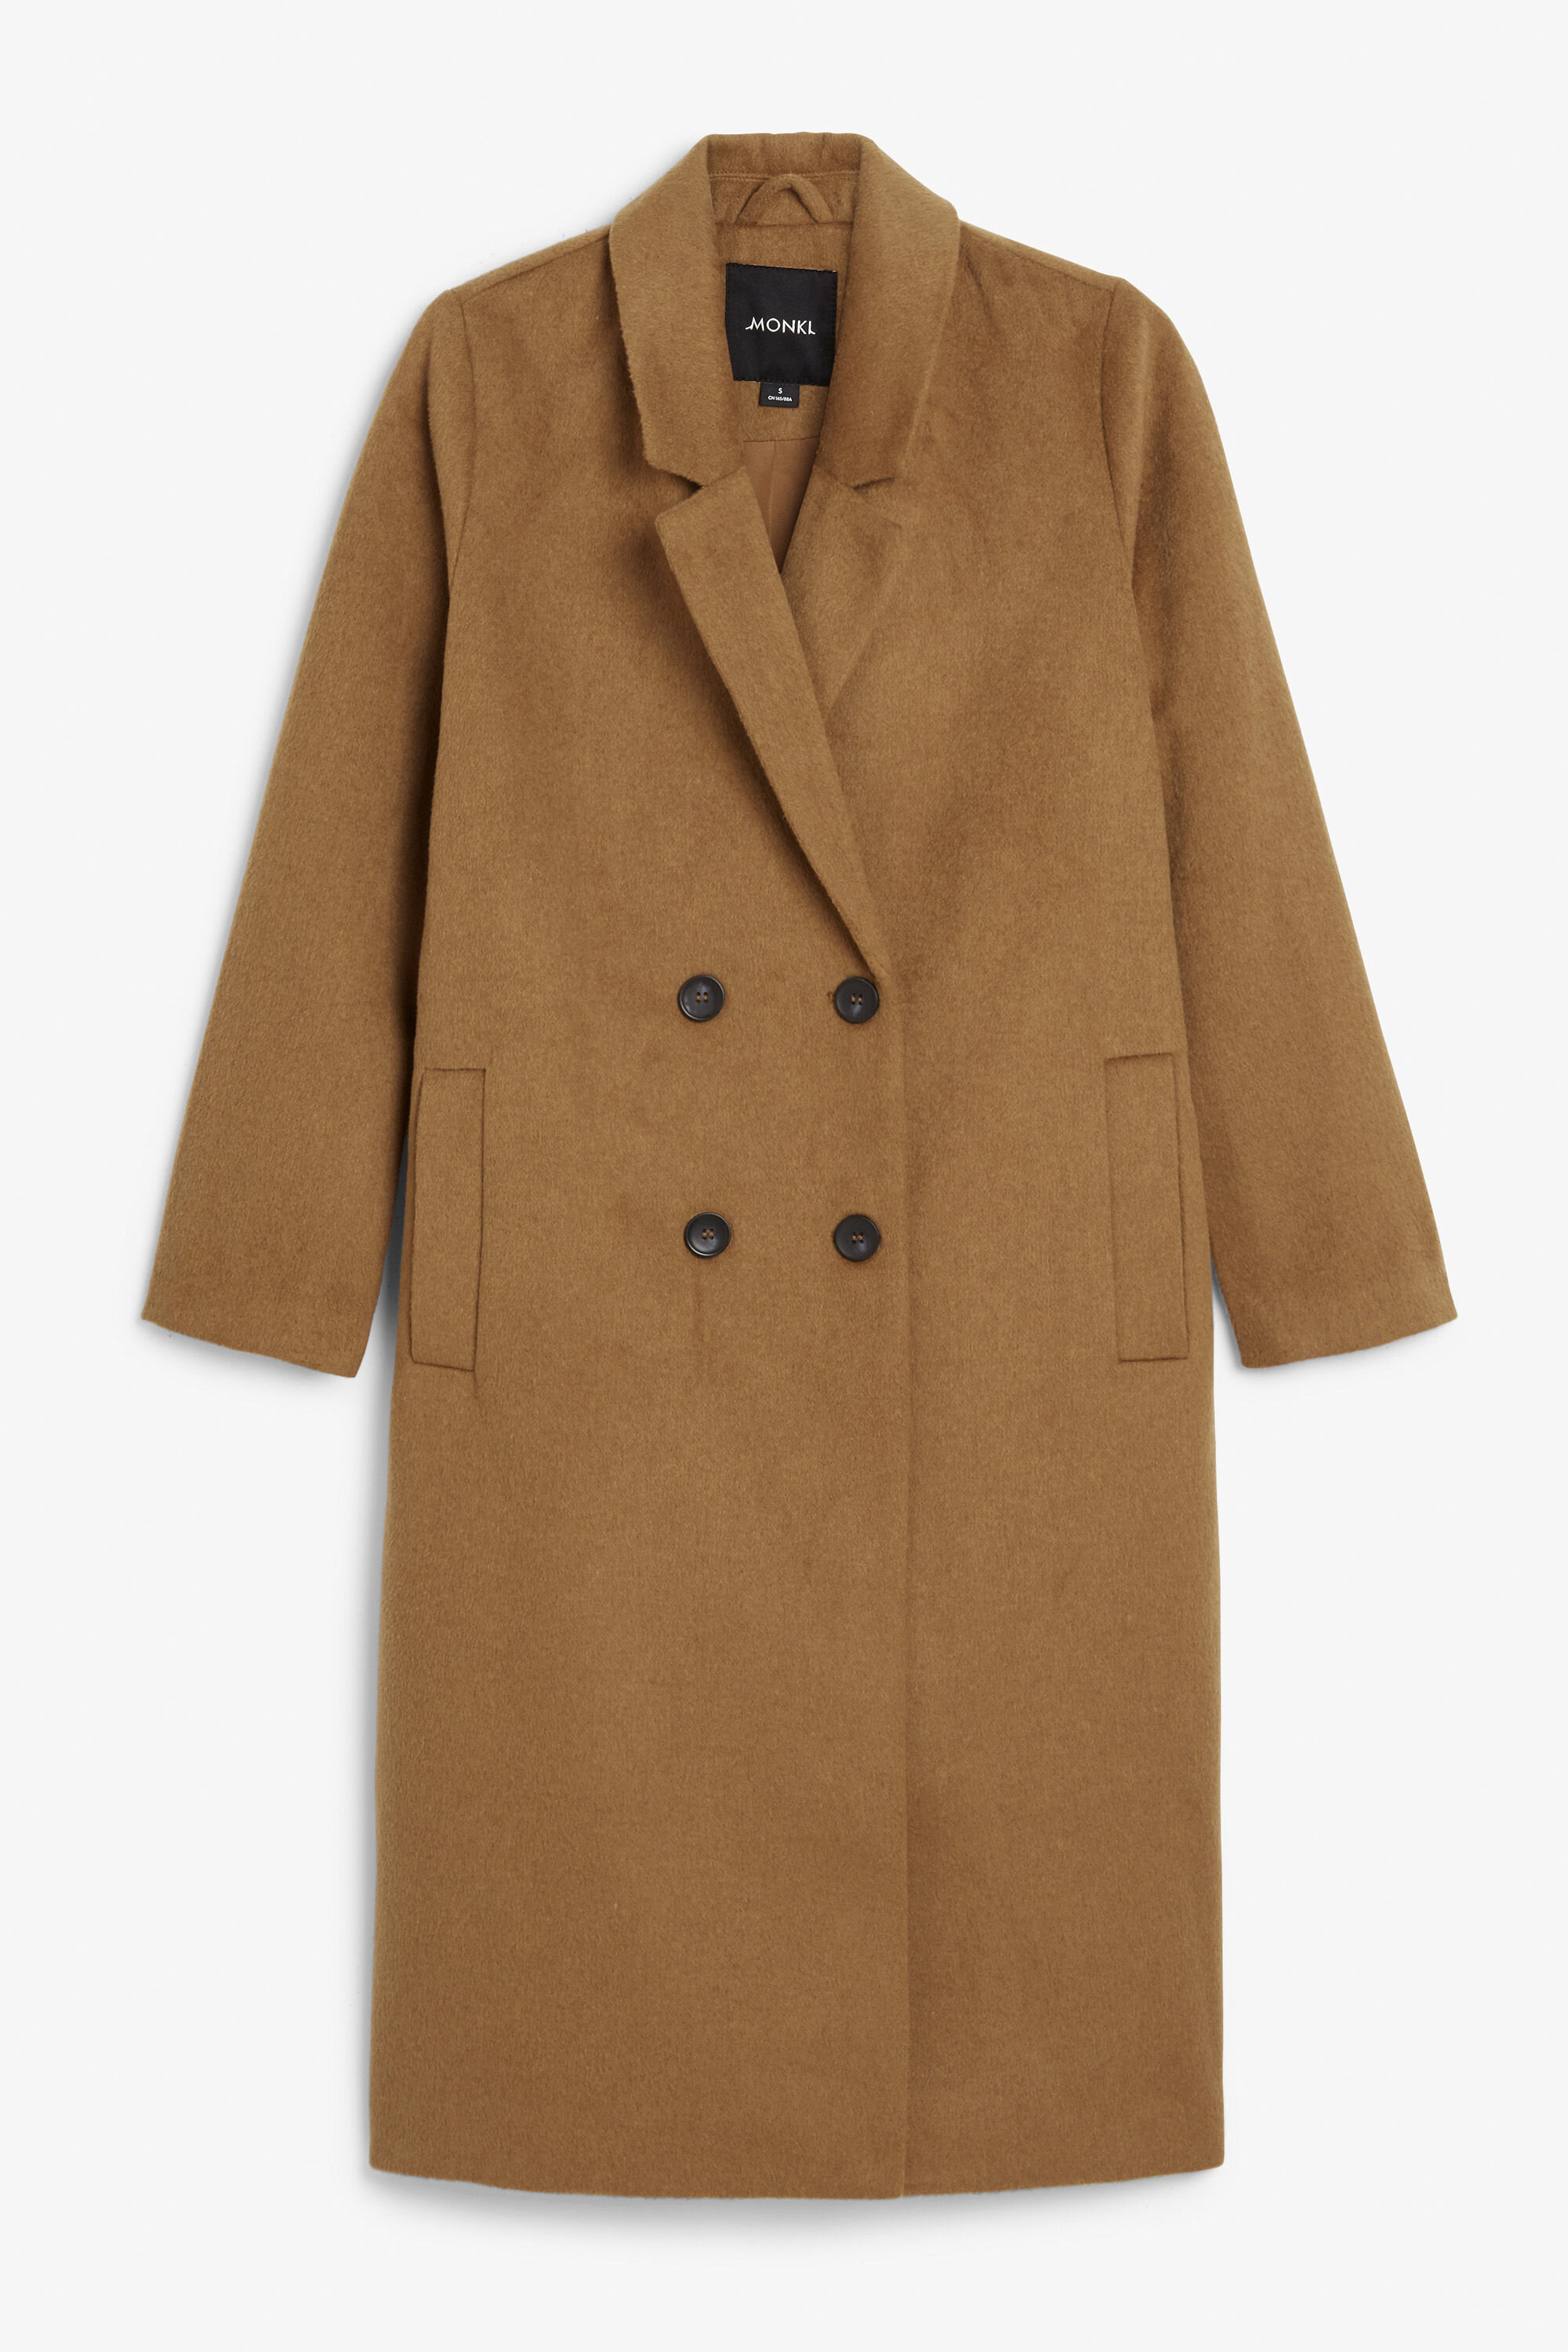 Coat, £65, Monki